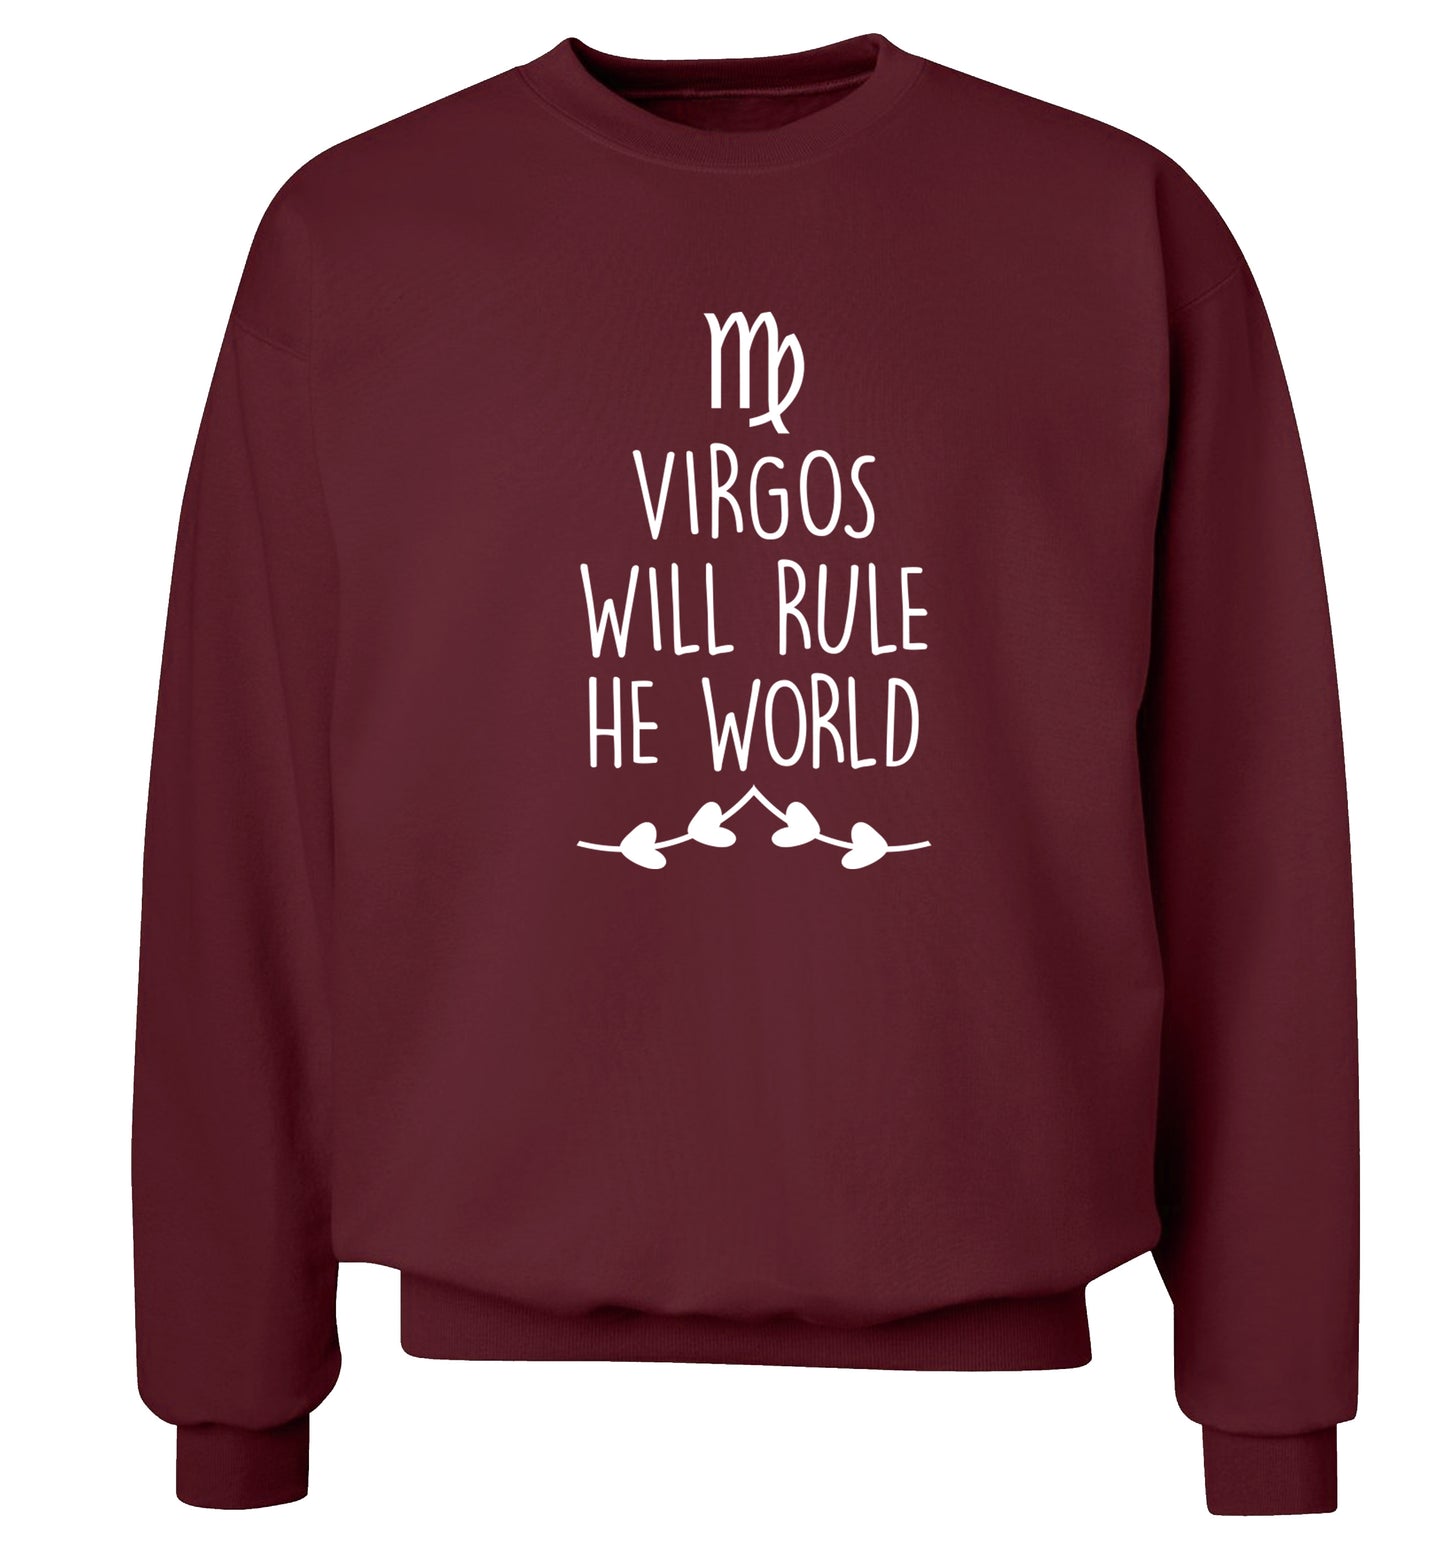 Virgos will rule the world Adult's unisex maroon Sweater 2XL